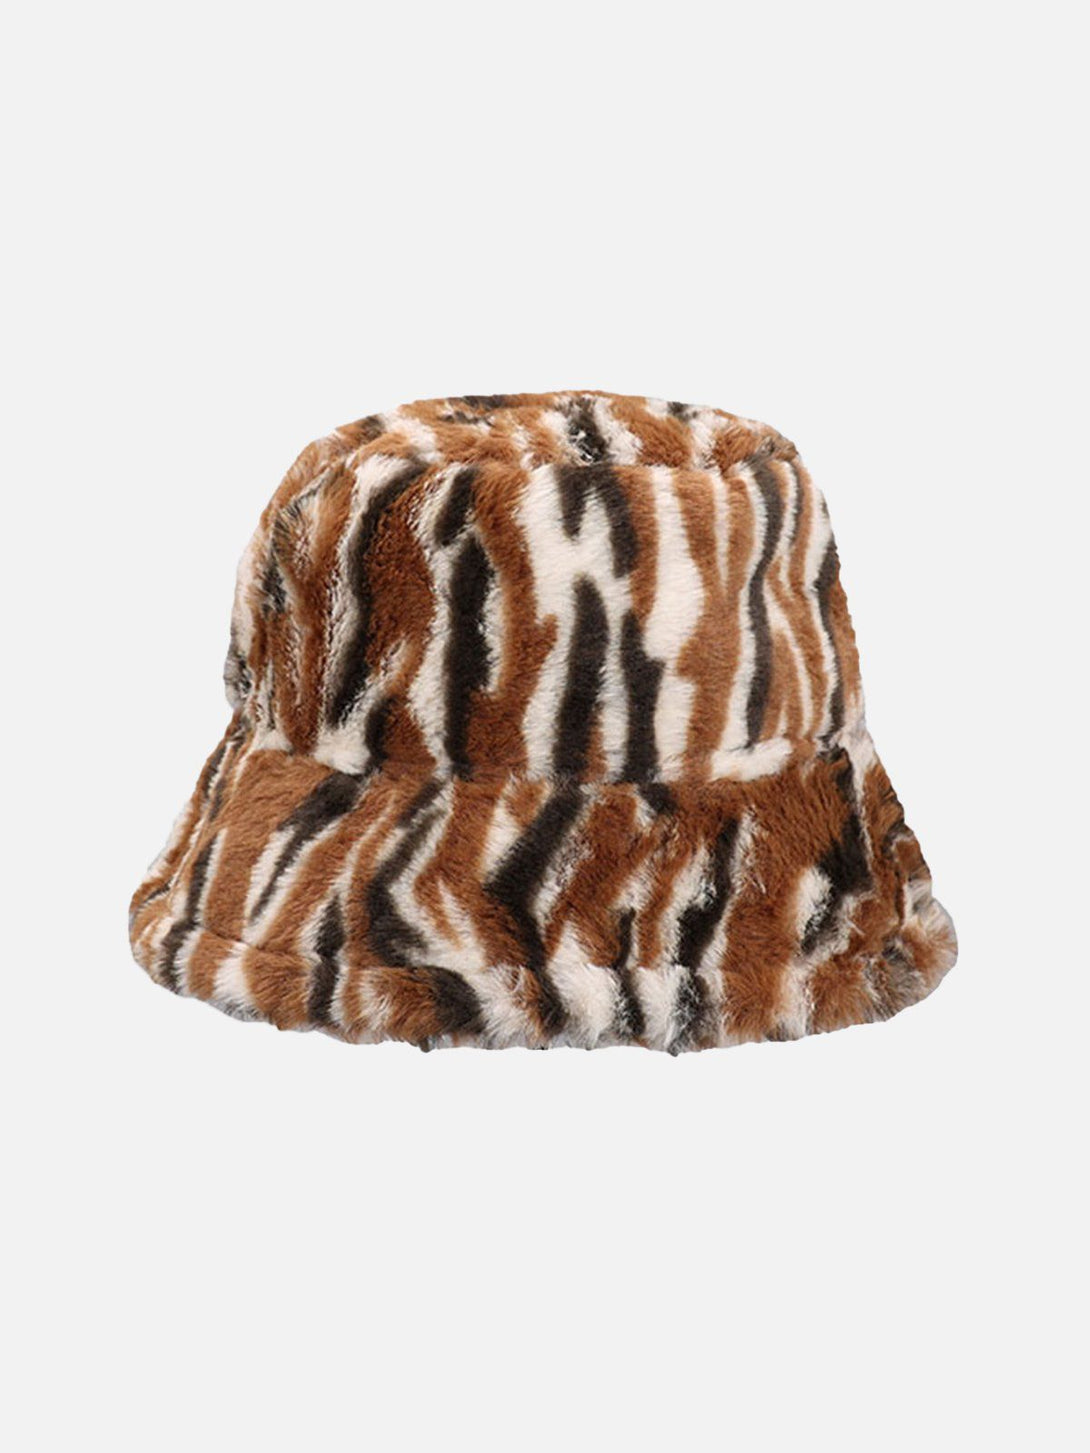 Majesda® - Contrast Striped Plush Vintage Bucket Hat- Outfit Ideas - Streetwear Fashion - majesda.com